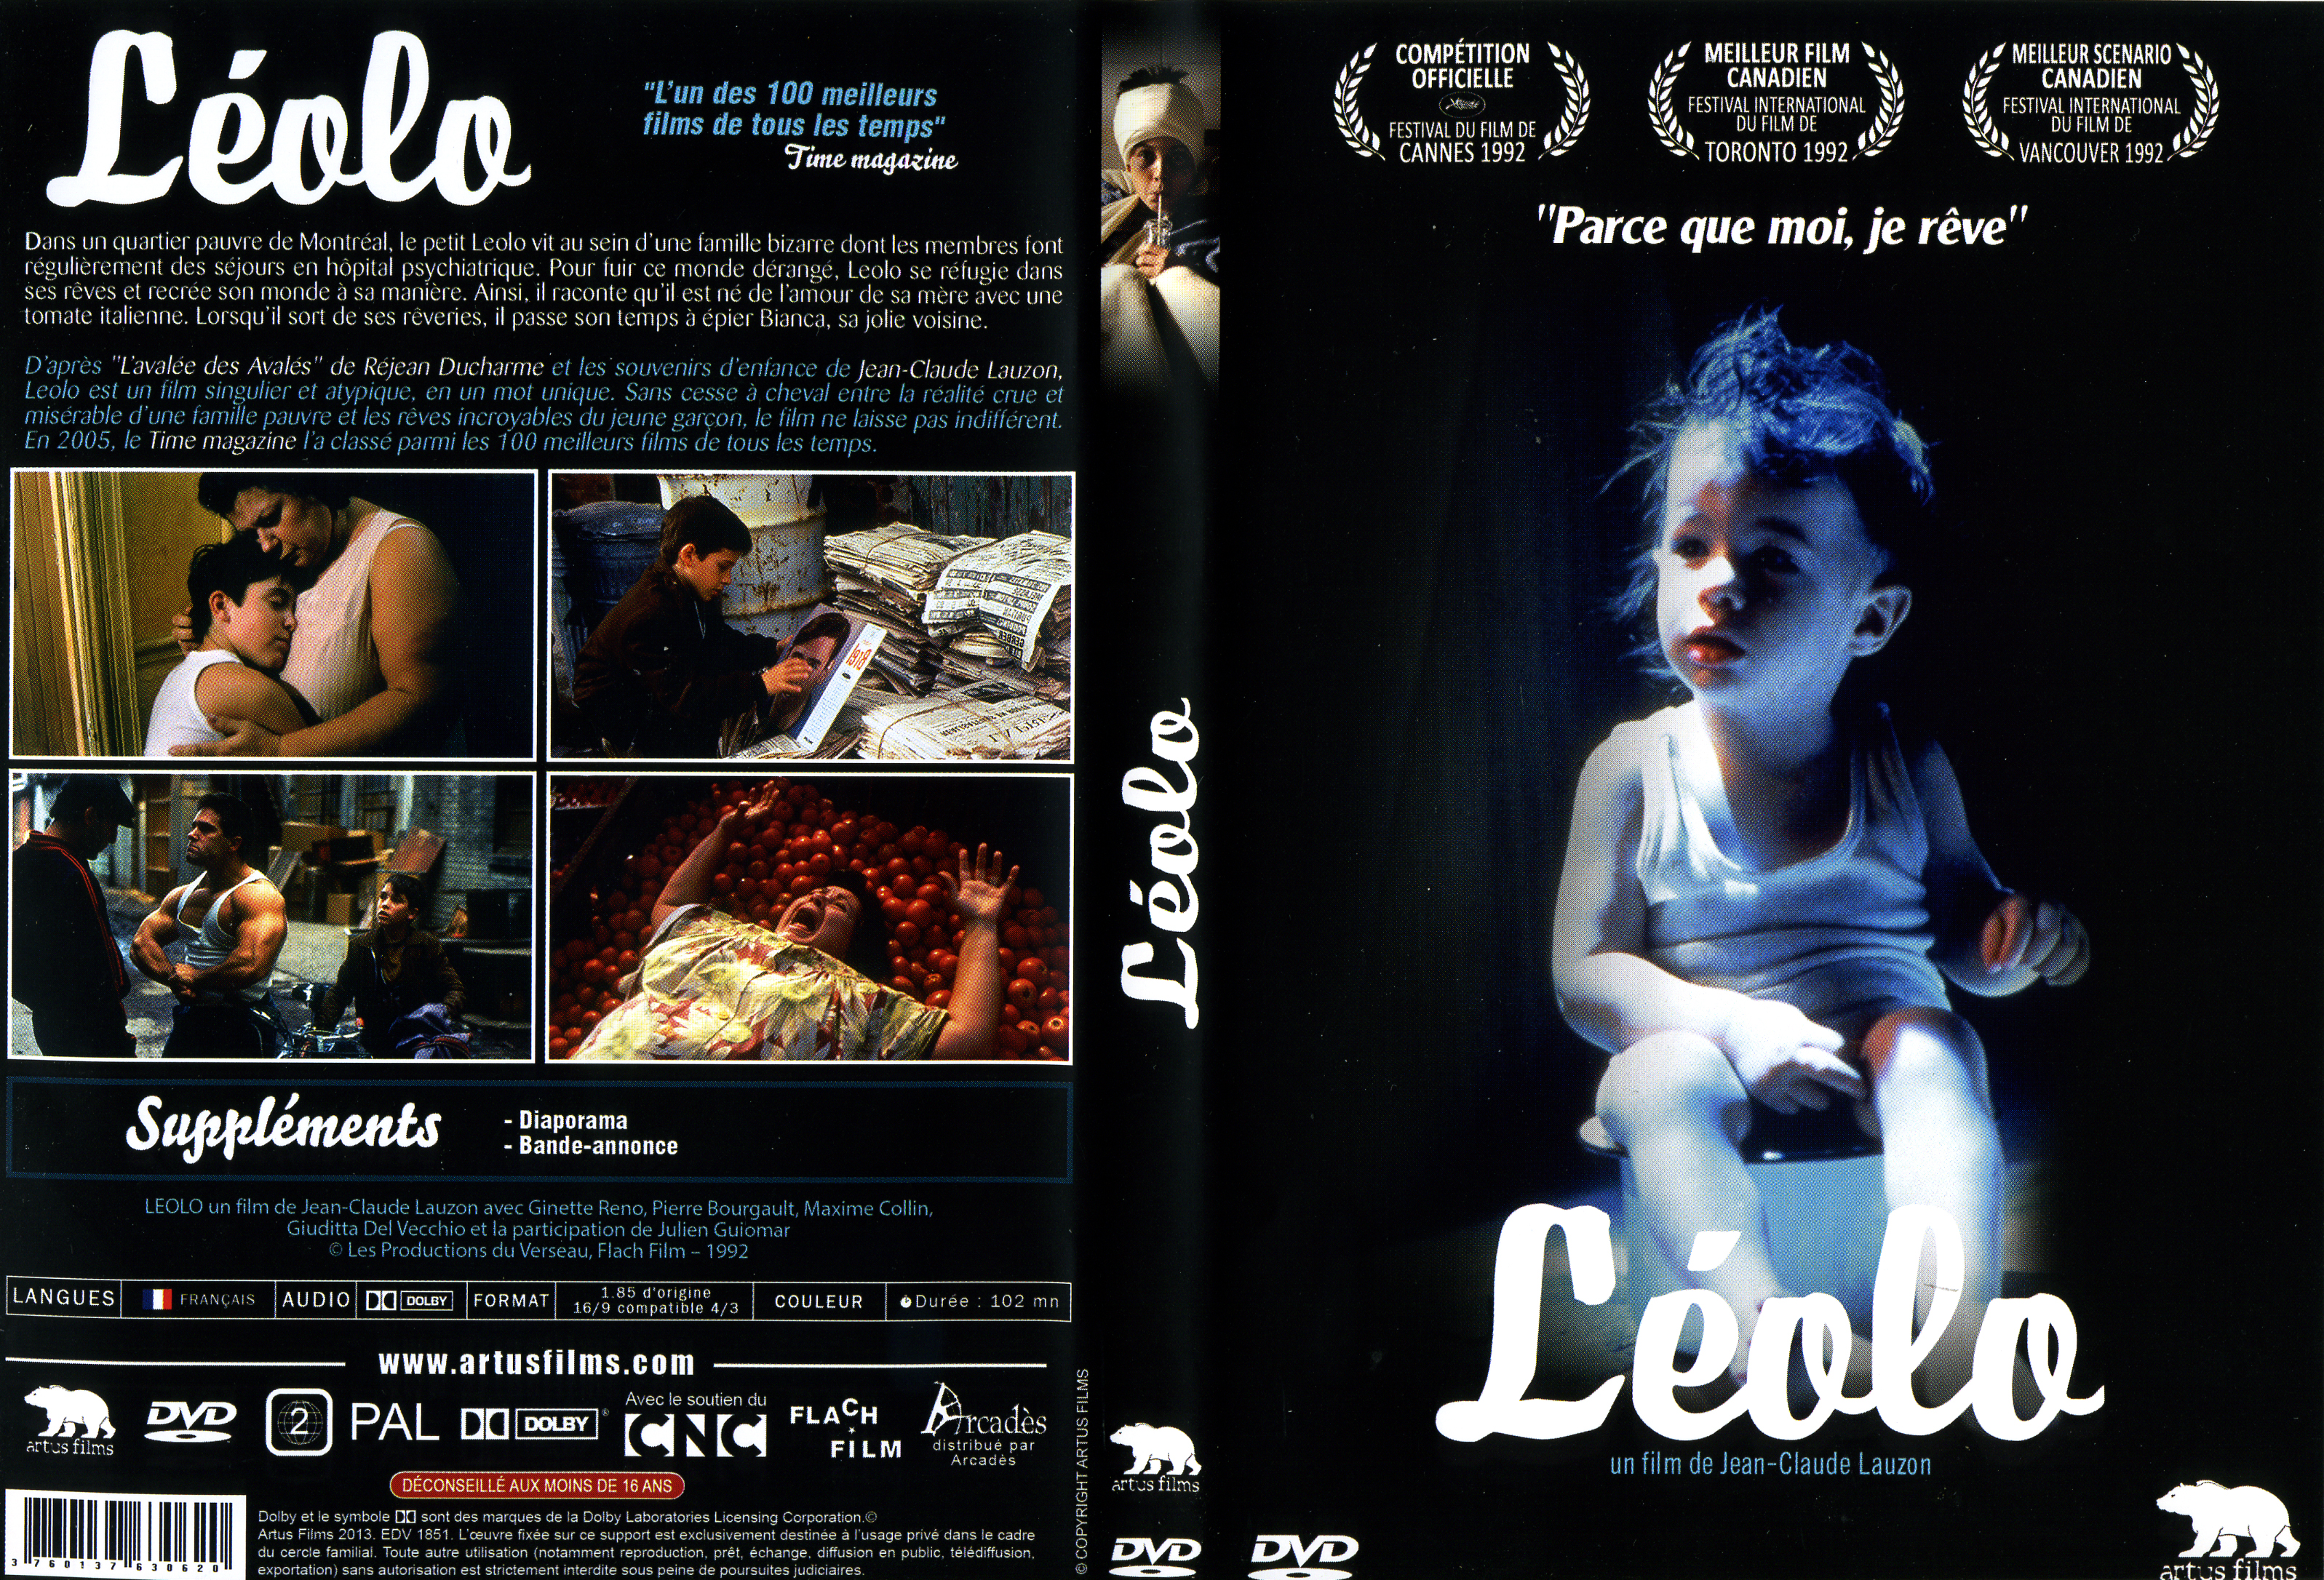 Jaquette DVD Leolo v2